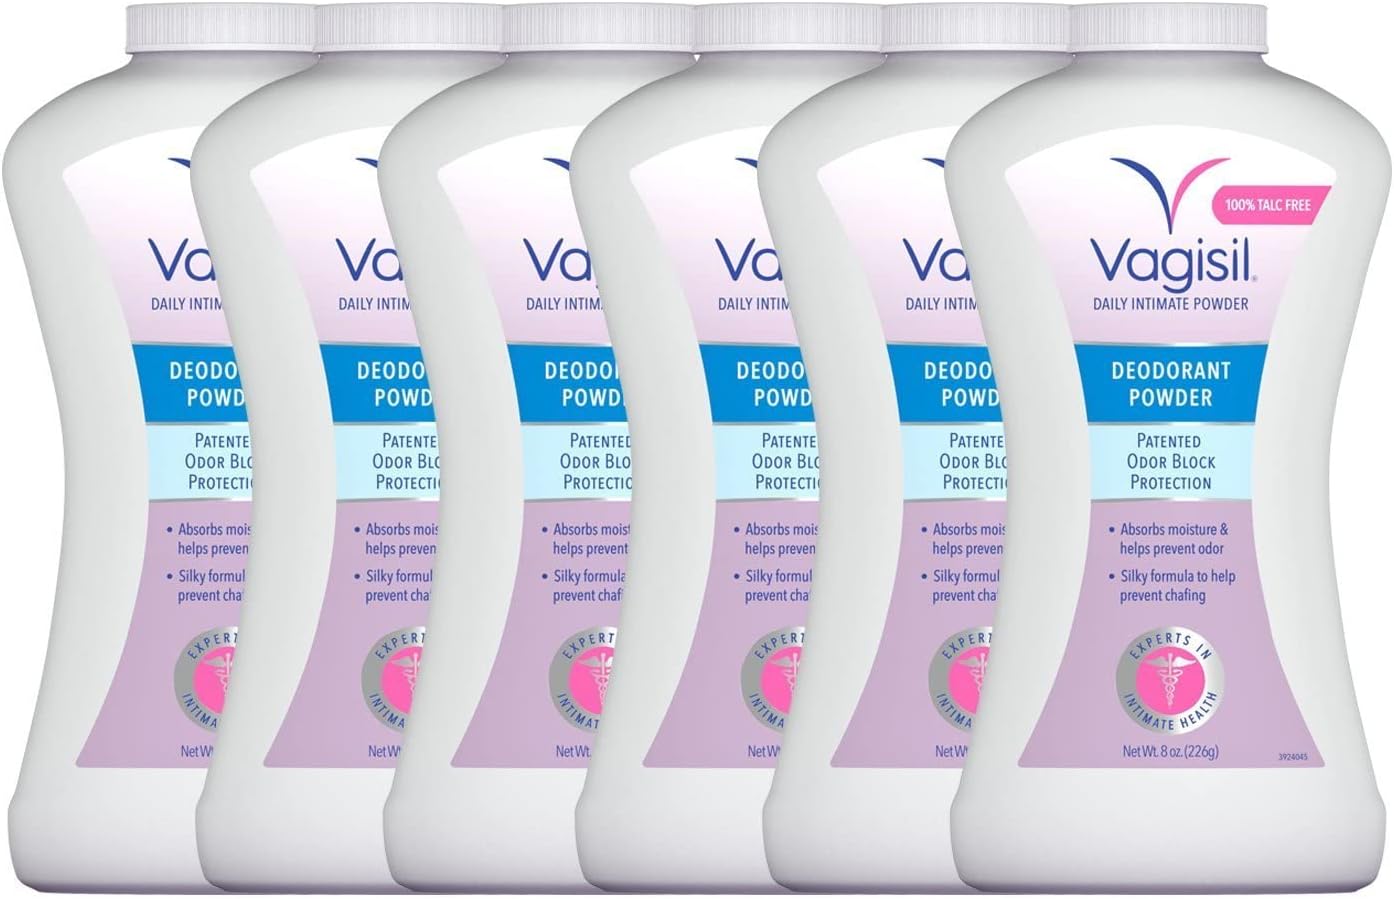 Vagisil Odor Block Deodorant Powder, 8 Ounce - Pack of 6 (Packaging May Vary)